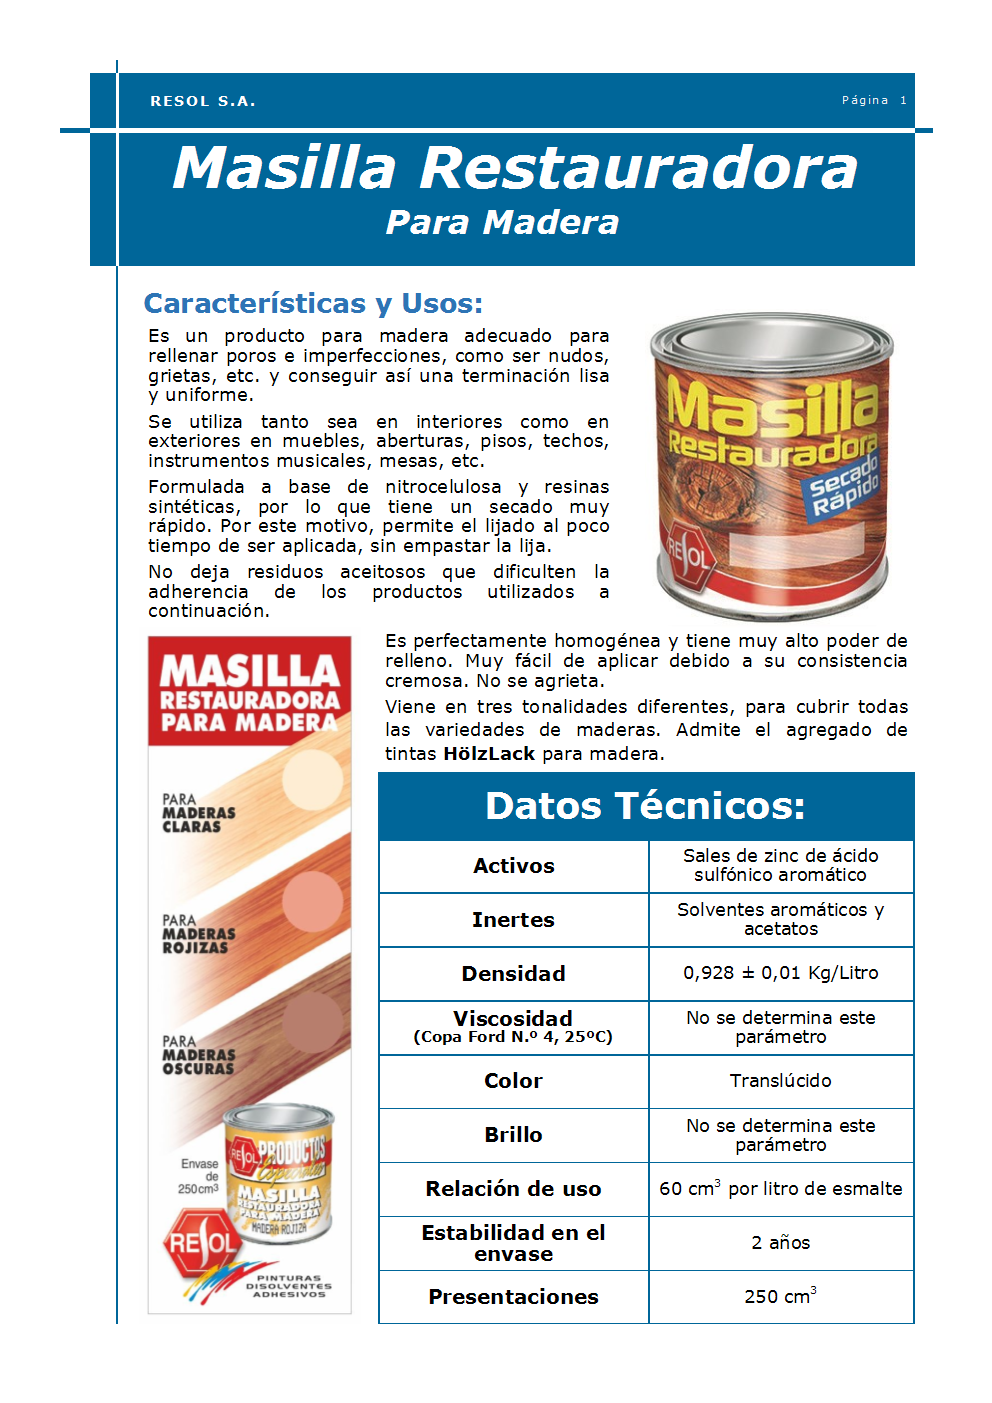 Masilla Restauradora - RESOL S.A.